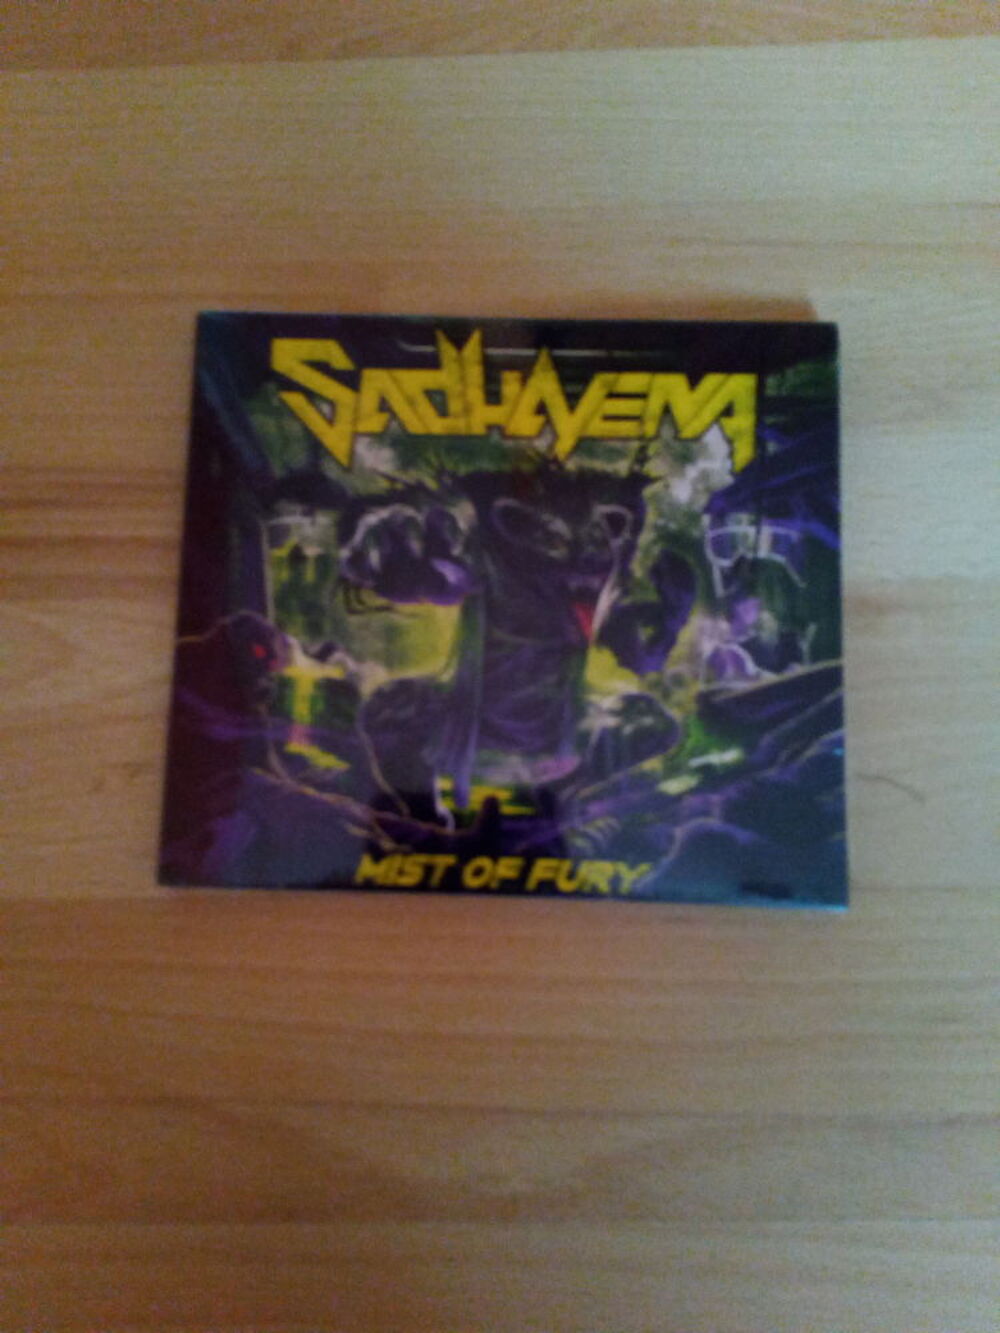 CD Mist of Fury de Sadhayena (Neuf) CD et vinyles